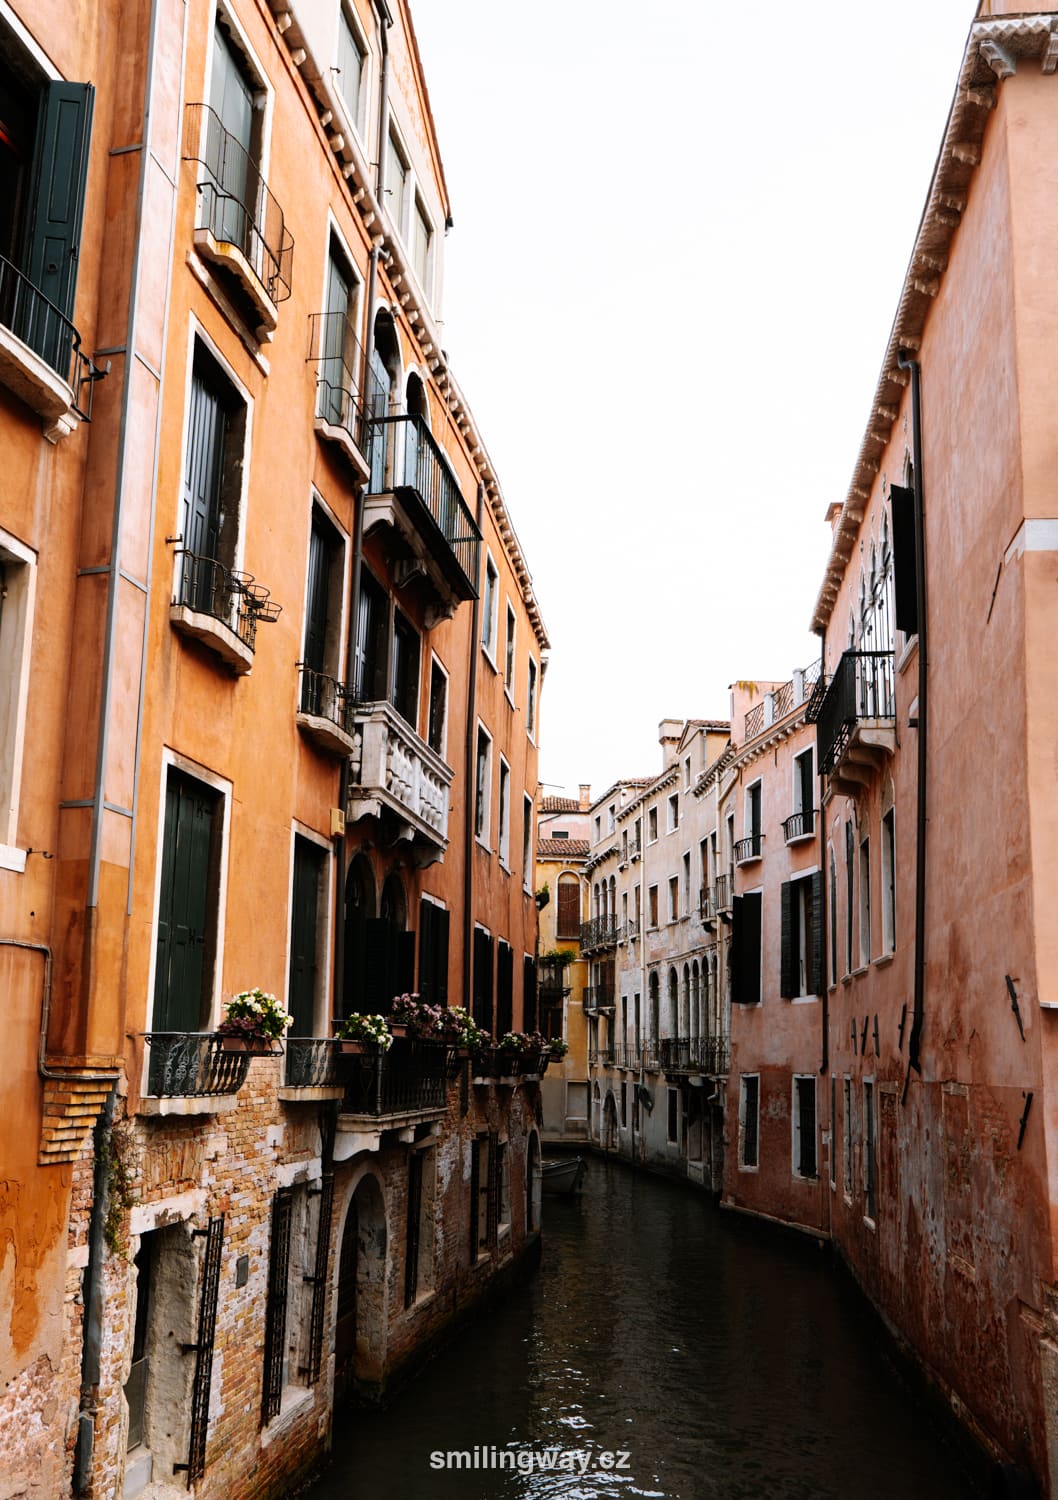 Benátky za jeden den